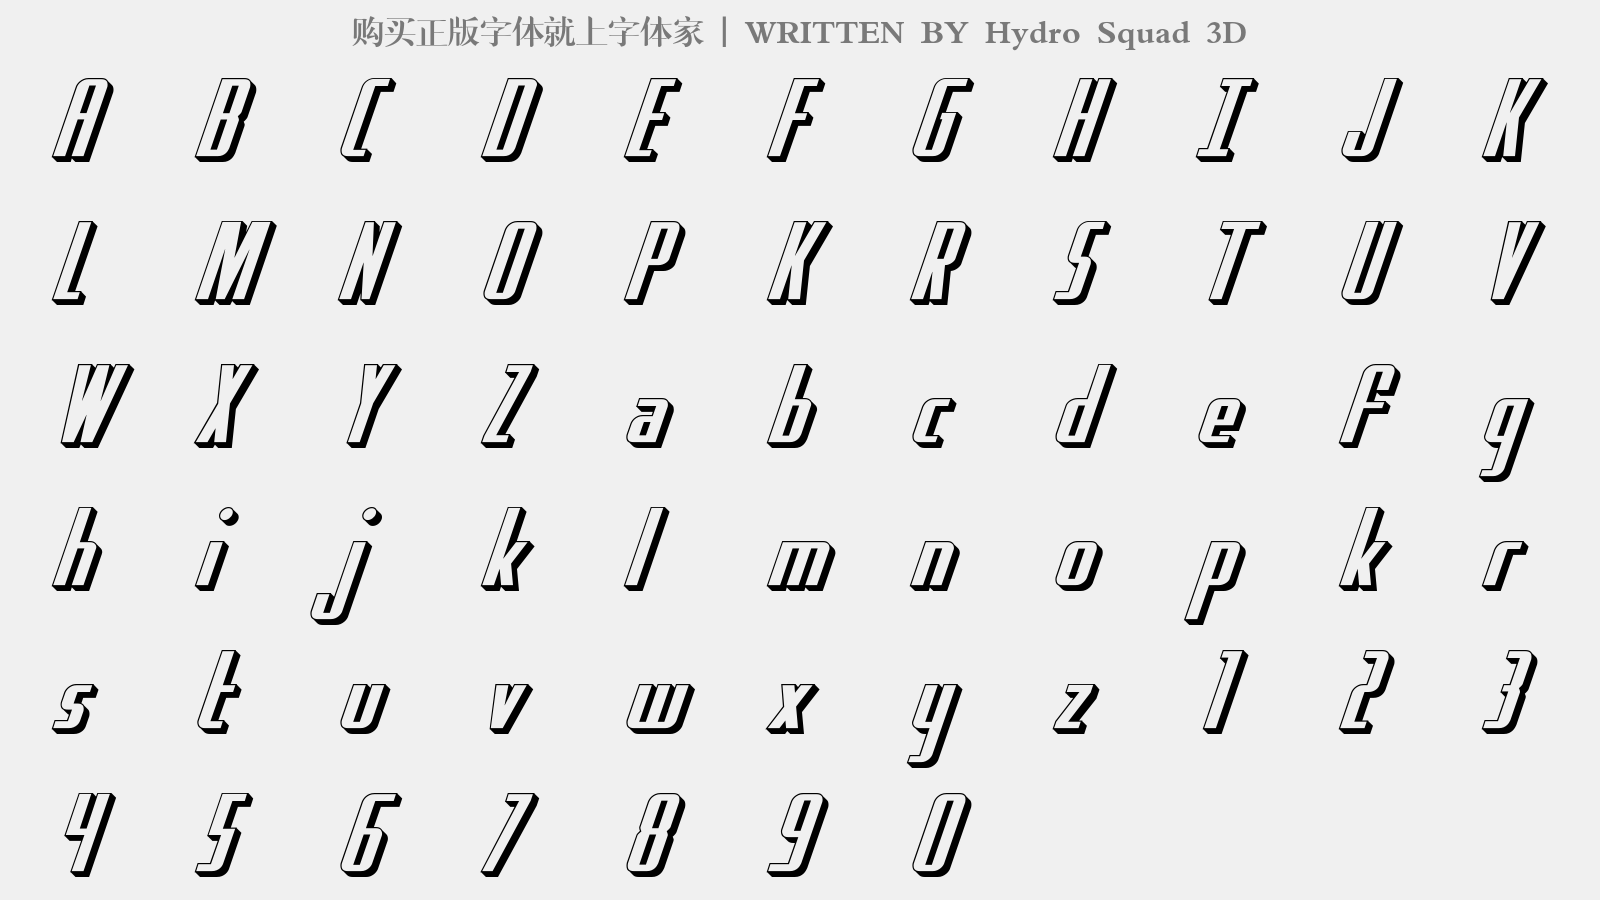 Hydro Squad 3D - 大写字母/小写字母/数字